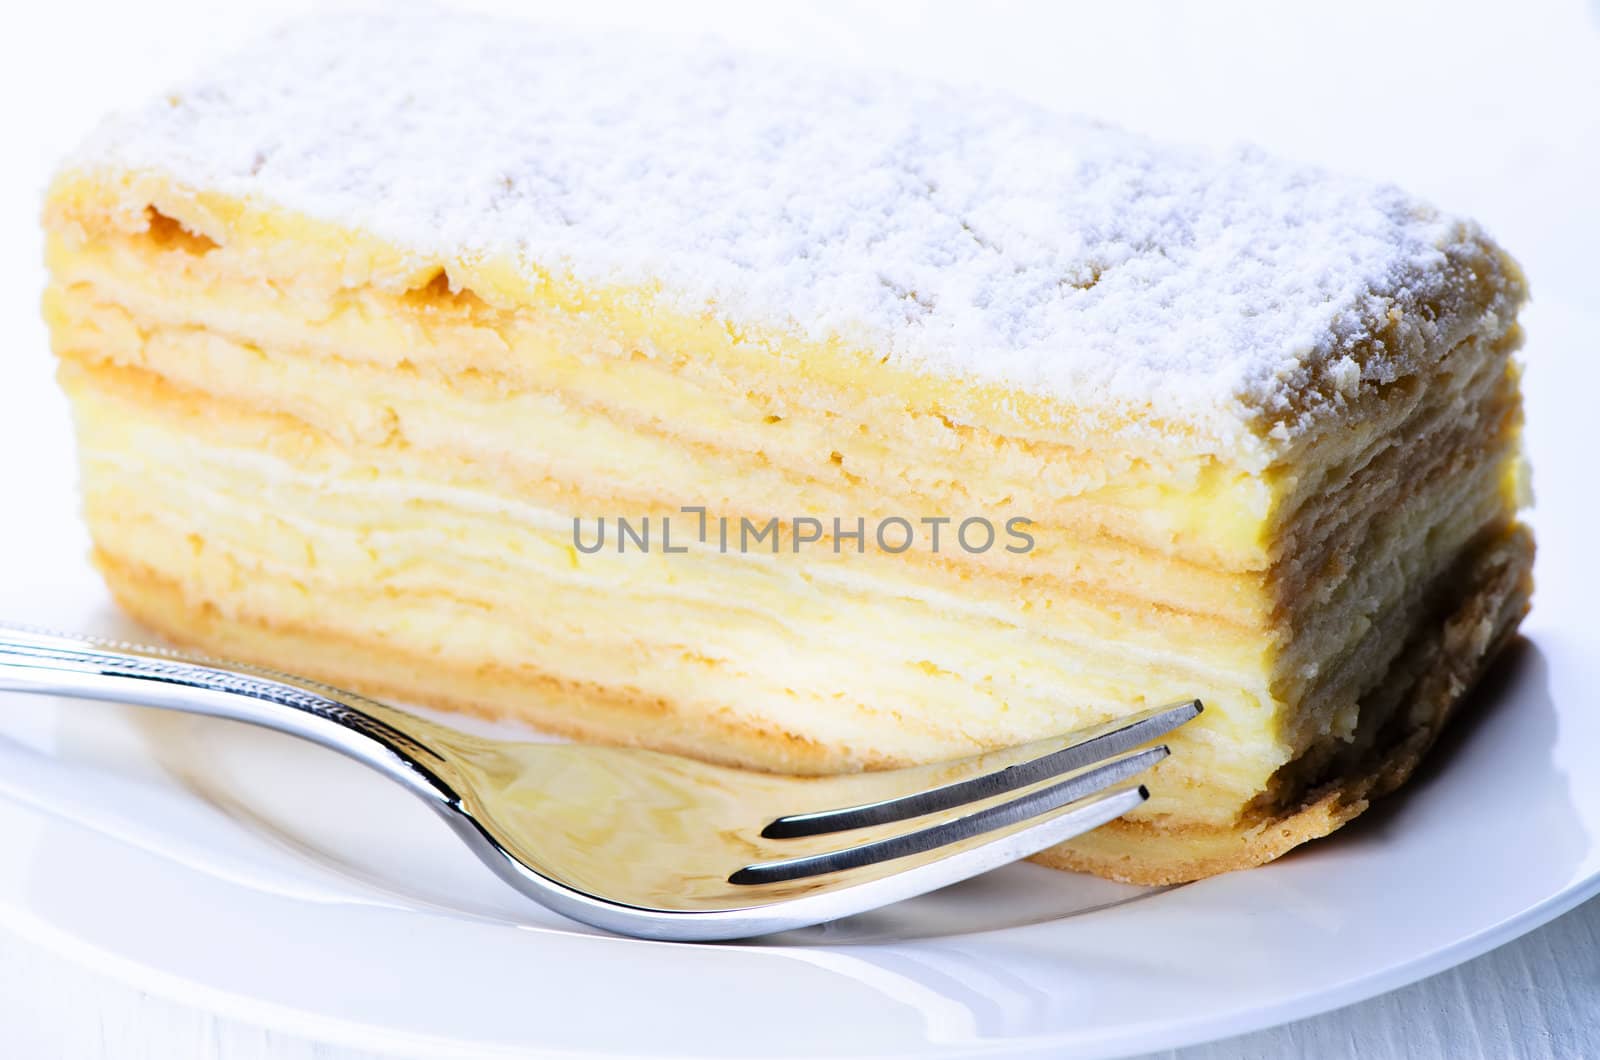 Delicious layered piece of cake by Nanisimova